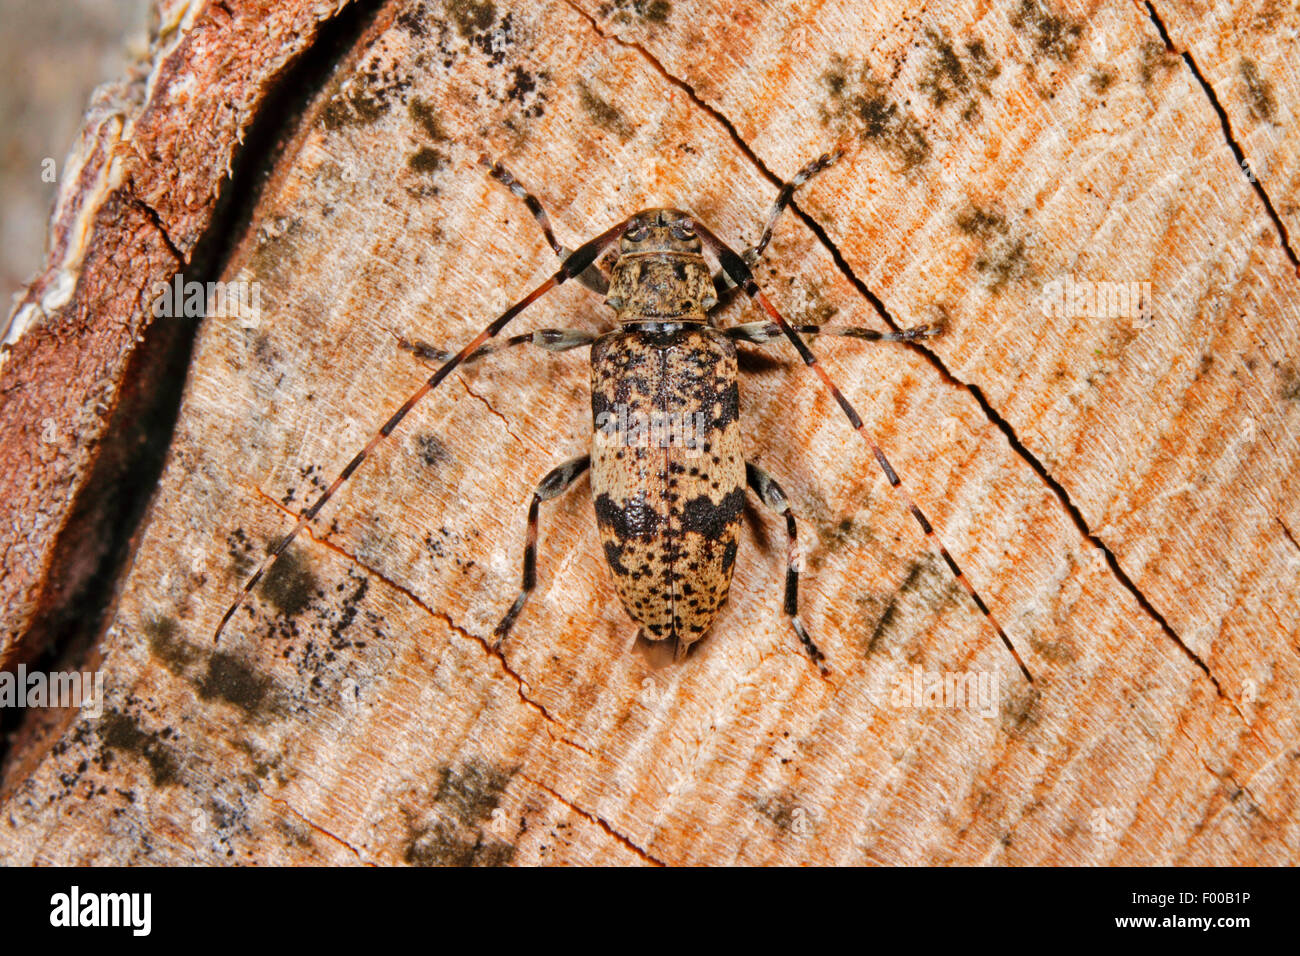 Black clouded longhorn beetle, Black-clouded longhorn beetle (Leiopus nebulosus, Cerambyx nebulosus), on a log, Germany Stock Photo